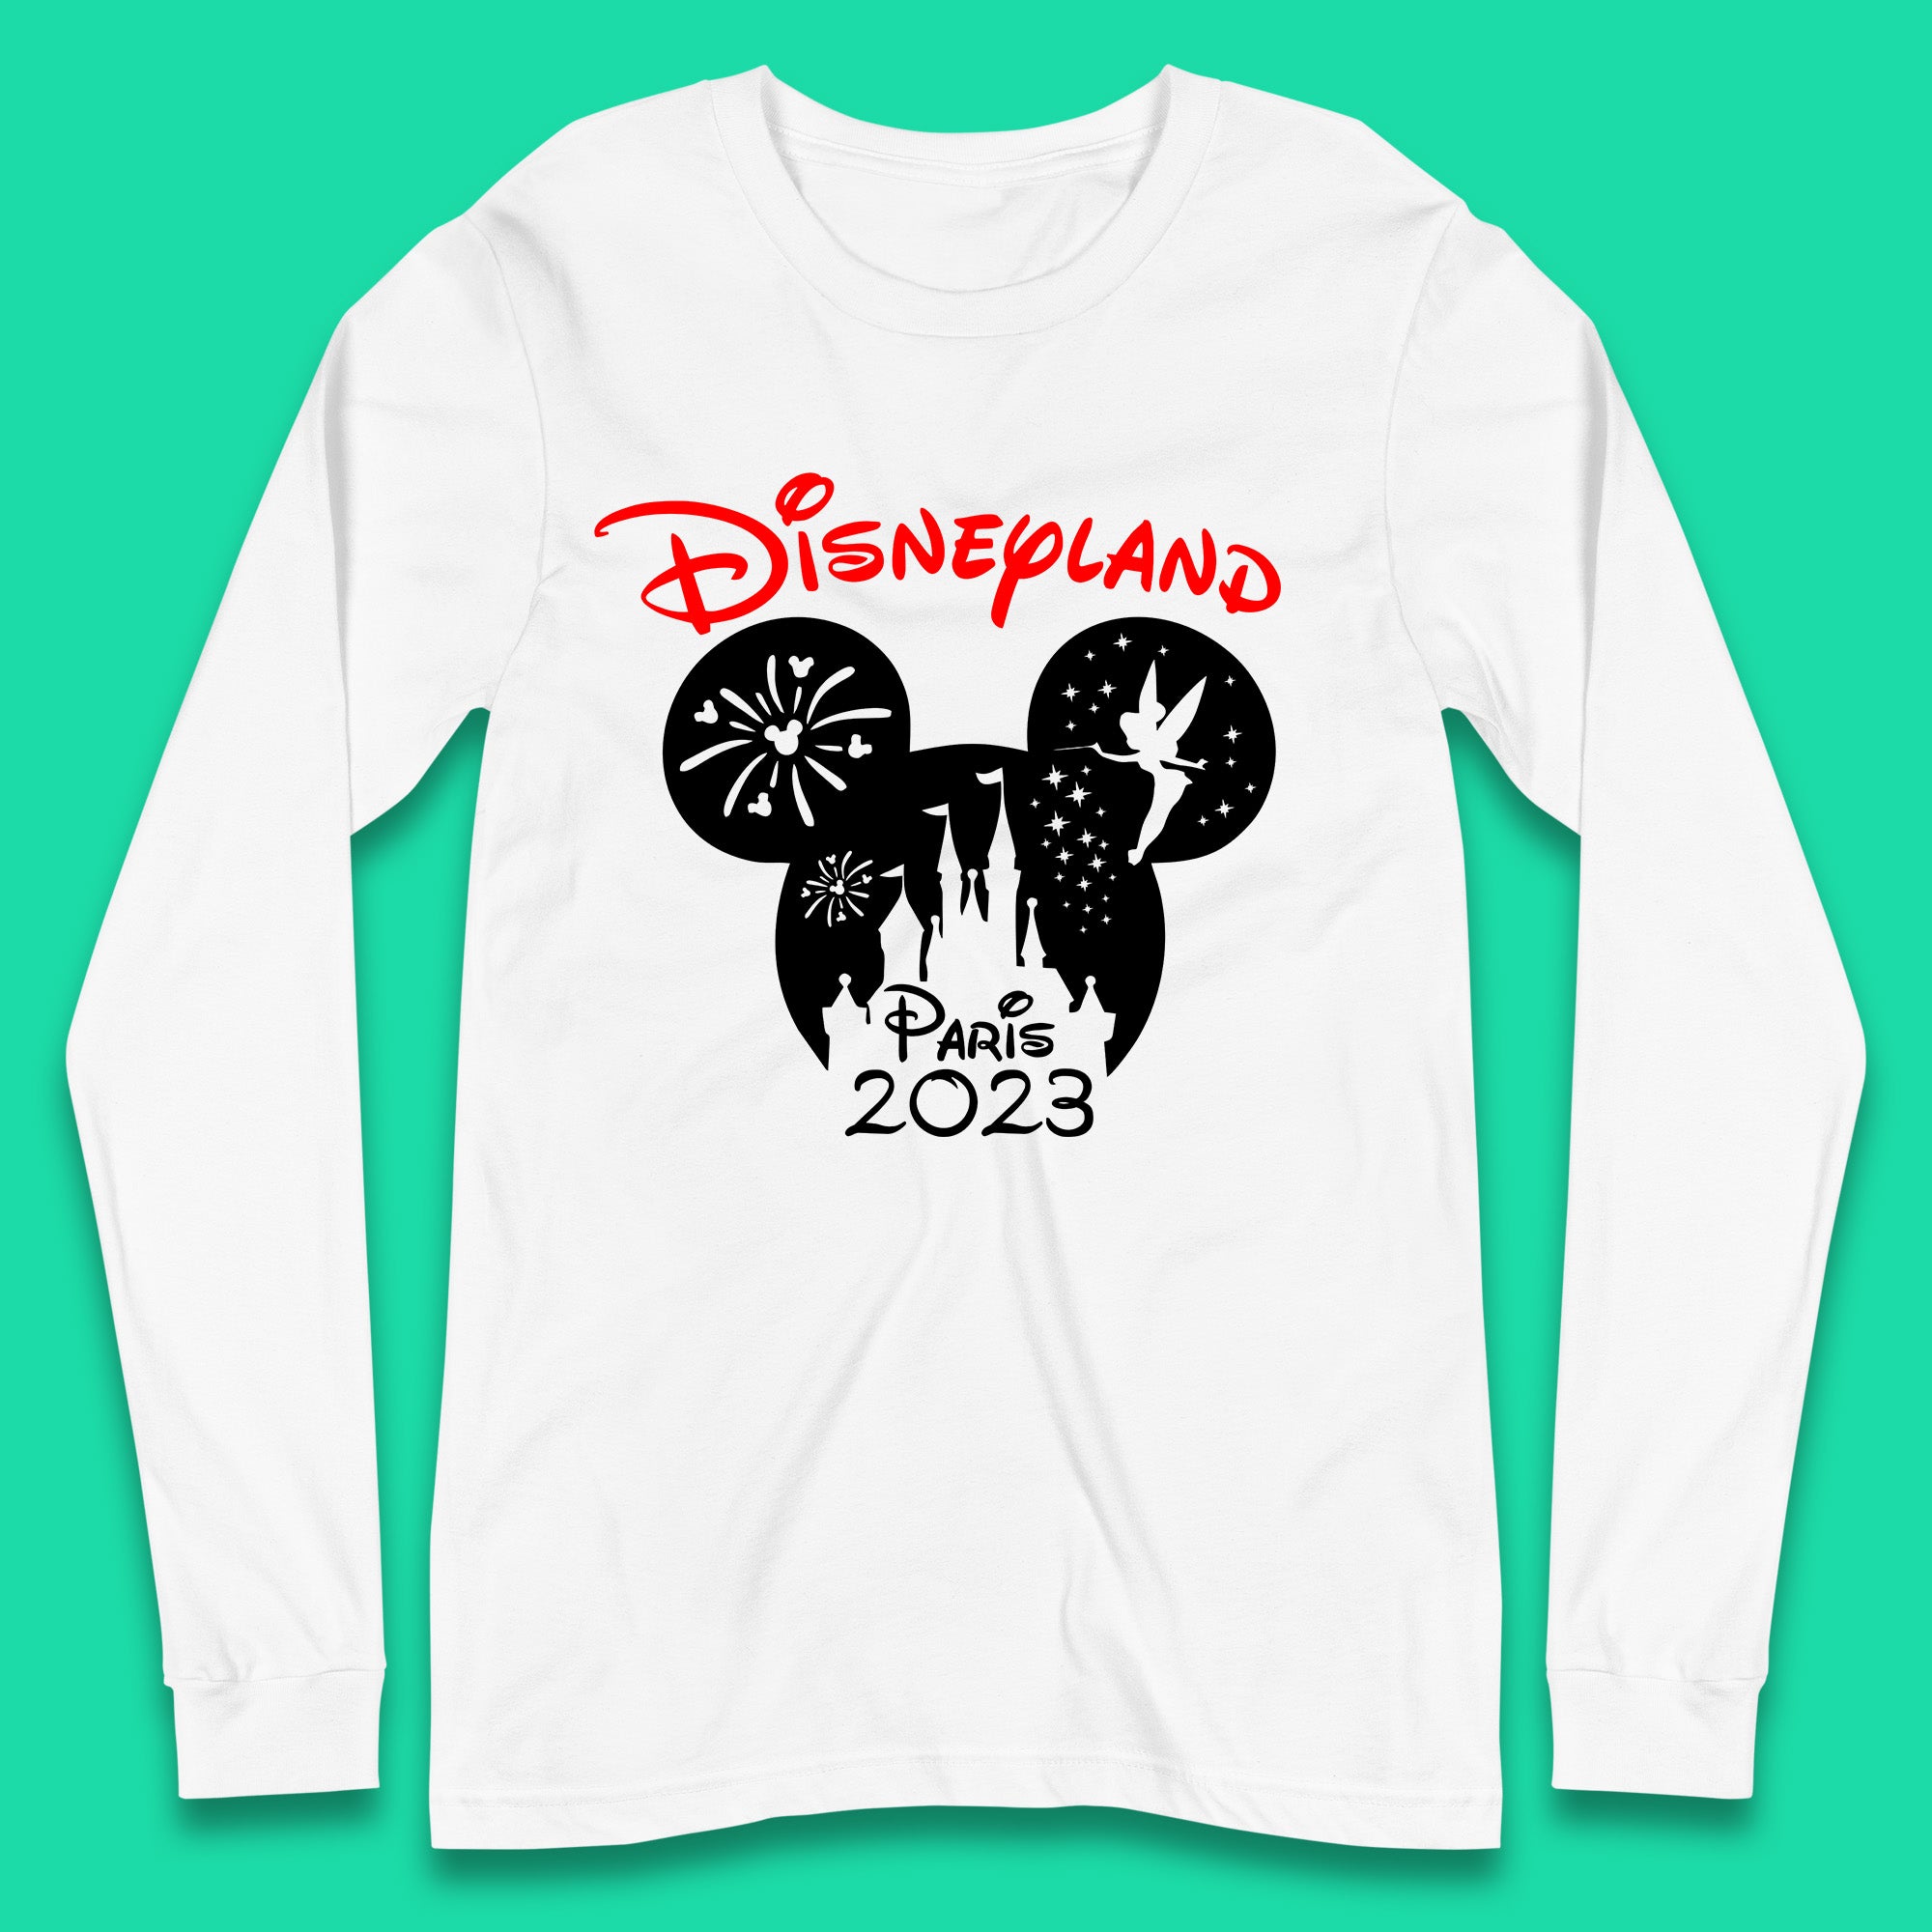 Disney Land Paris 2023 Disney Castle Mickey Mouse Minnie Mouse Cartoon Magical Kingdom Disneyland Vacation Trip Long Sleeve T Shirt